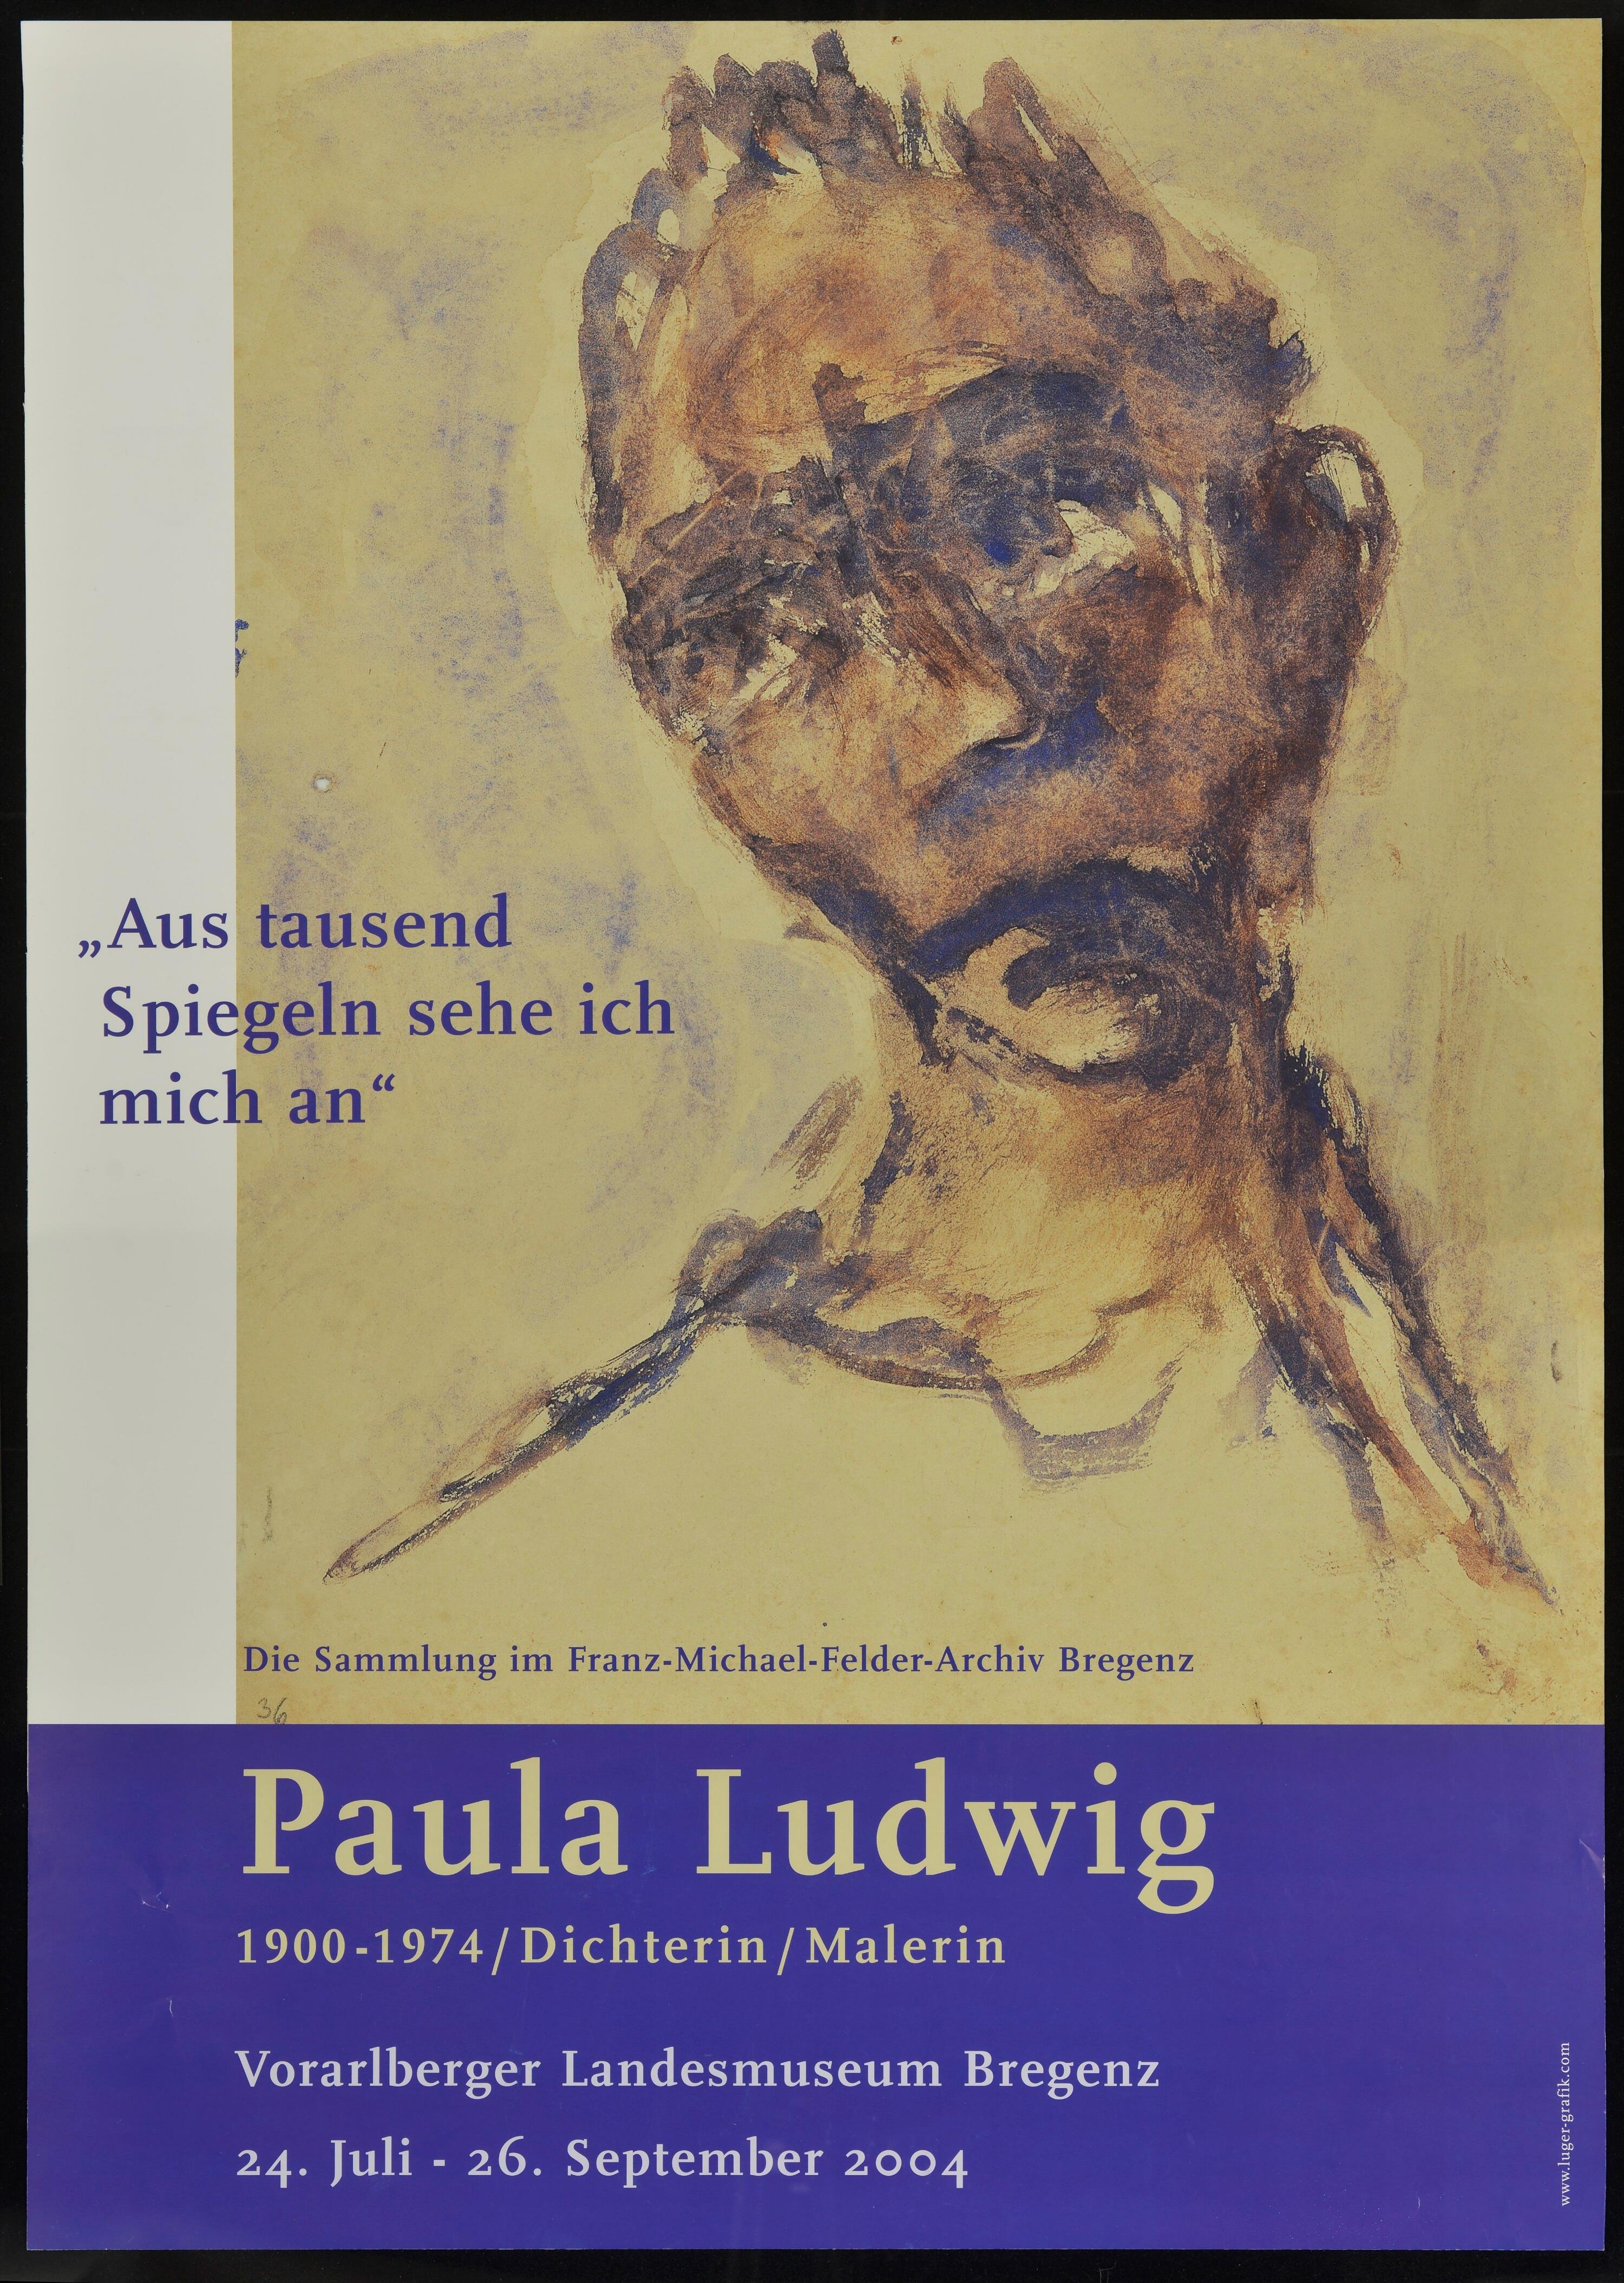 Paula Ludwig - 1900-1971 / Dichterin / Malerin></div>


    <hr>
    <div class=